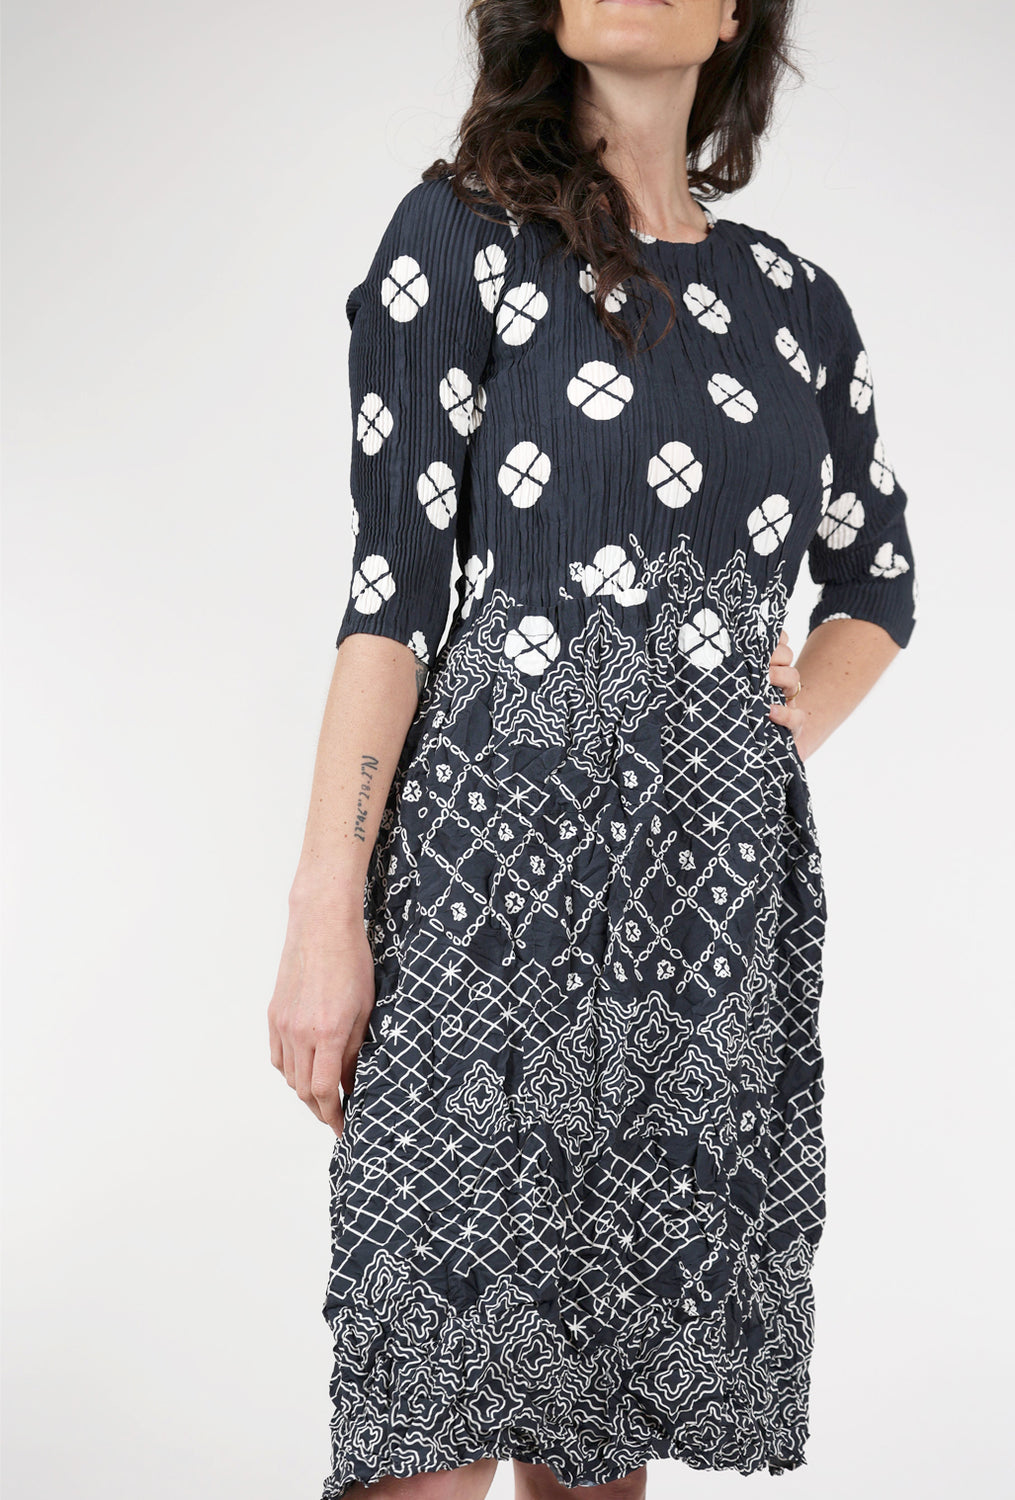 Alquema 3/4-Sleeve Smash Pocket Dress, Navy Geo Print 